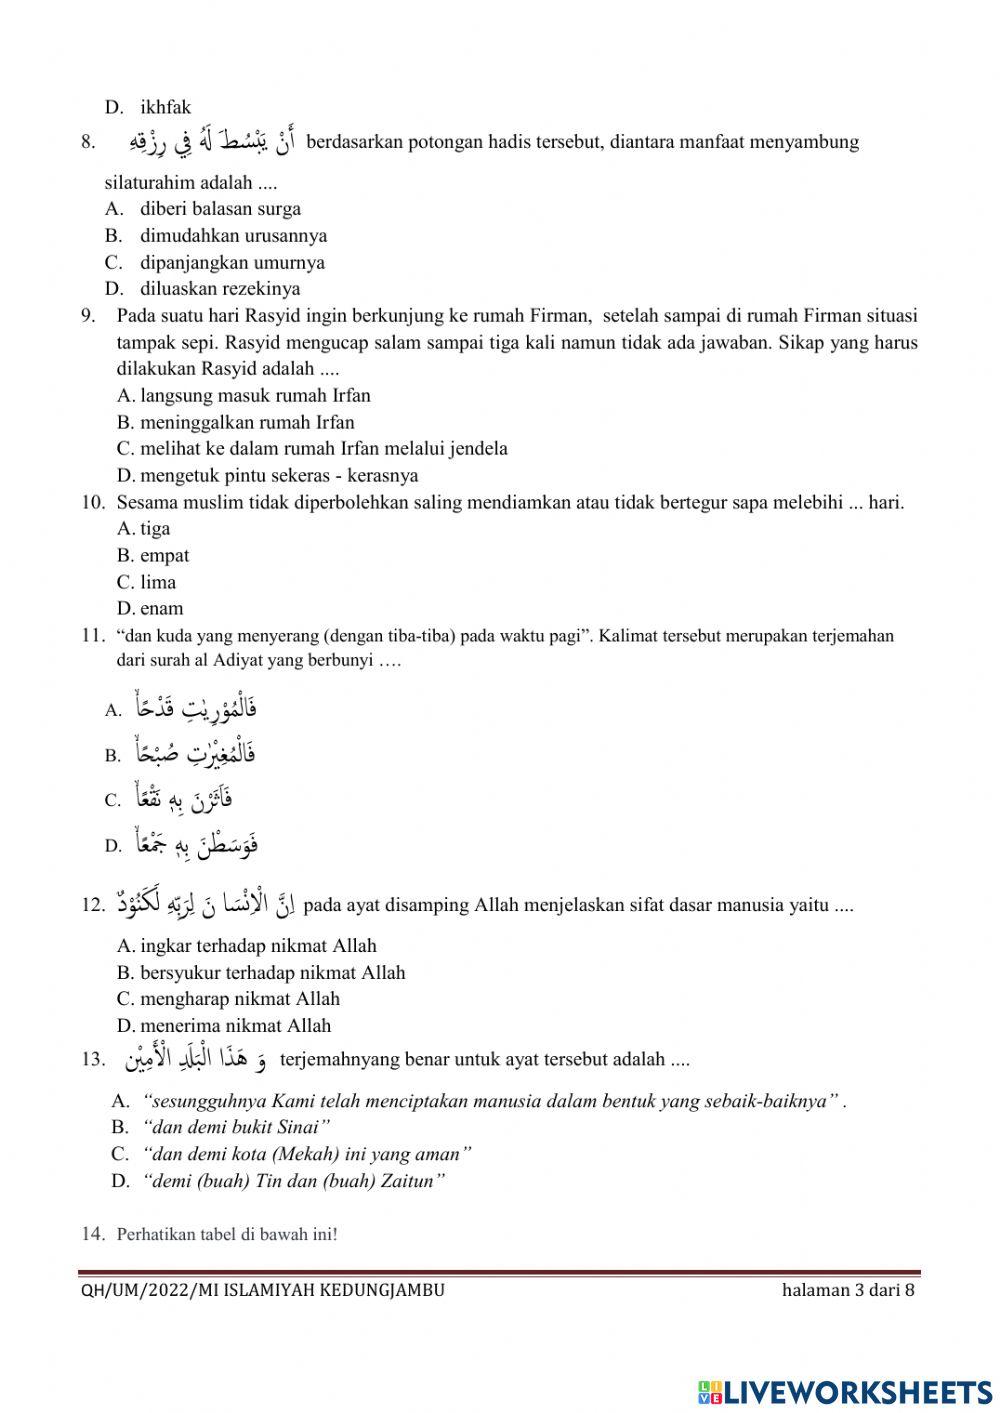 Ujian Madrasah MI Islamiyah Kedungjambu